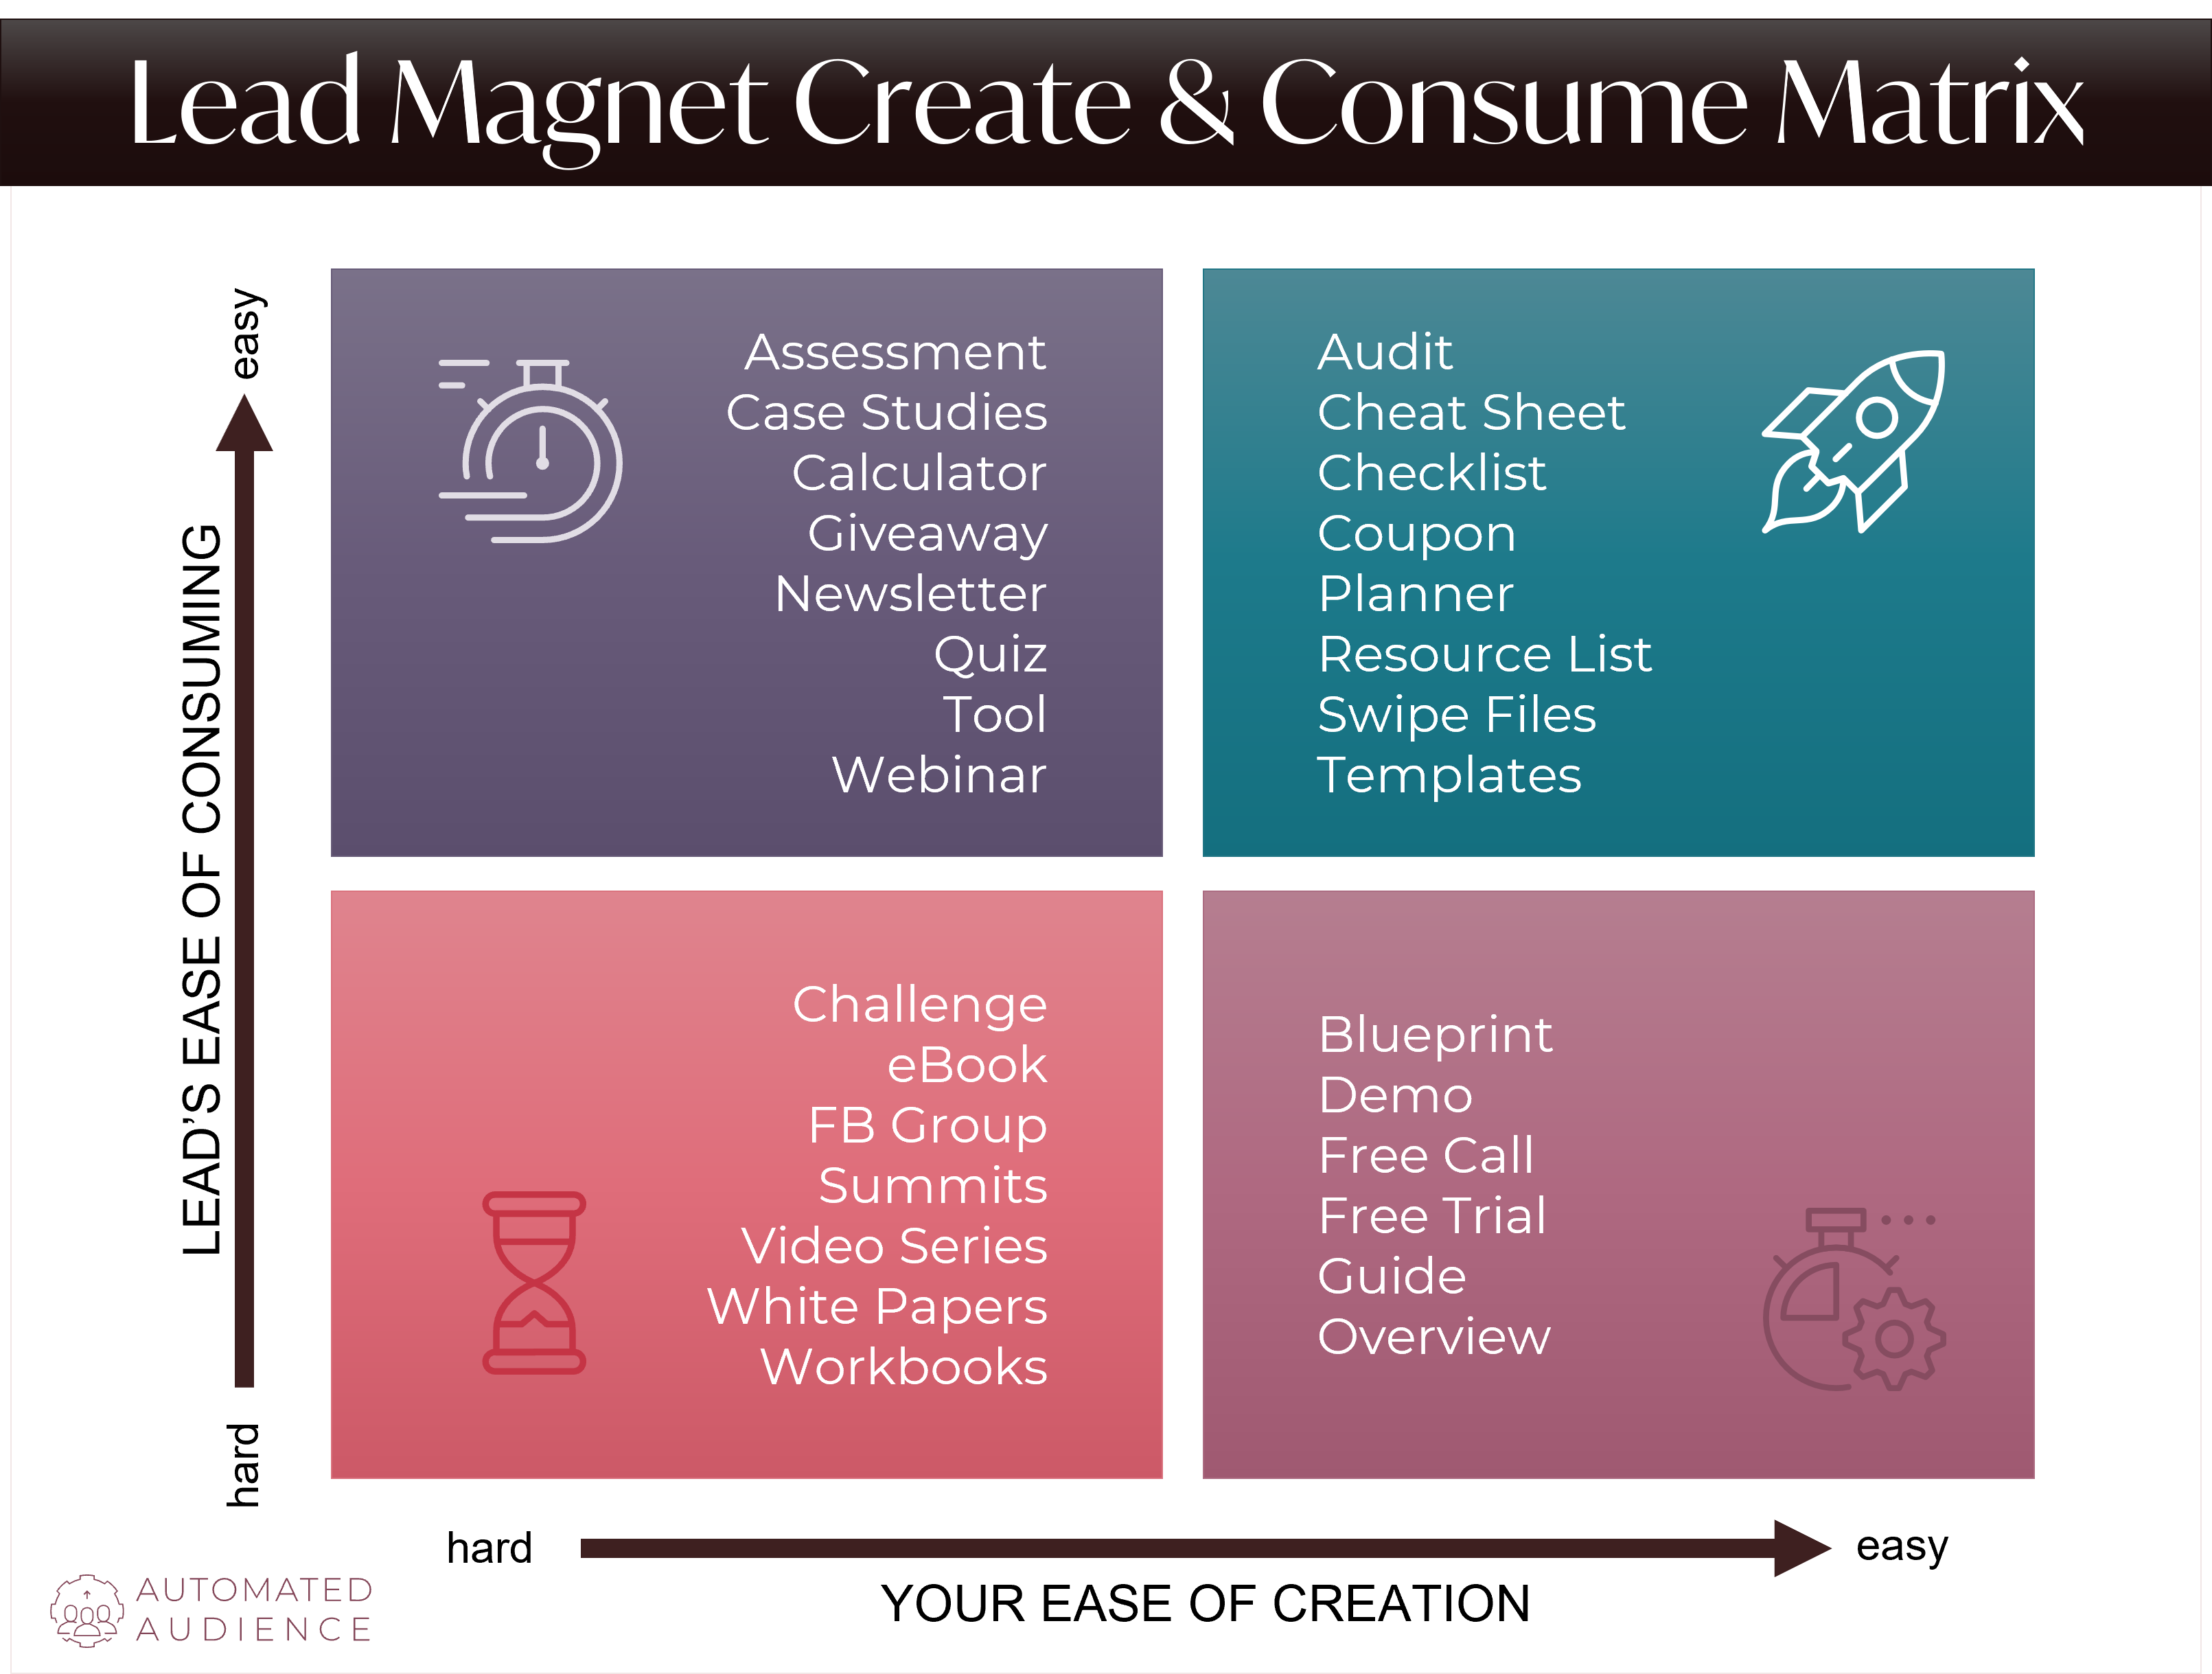 Lead Magnet Create and Consume Matrix